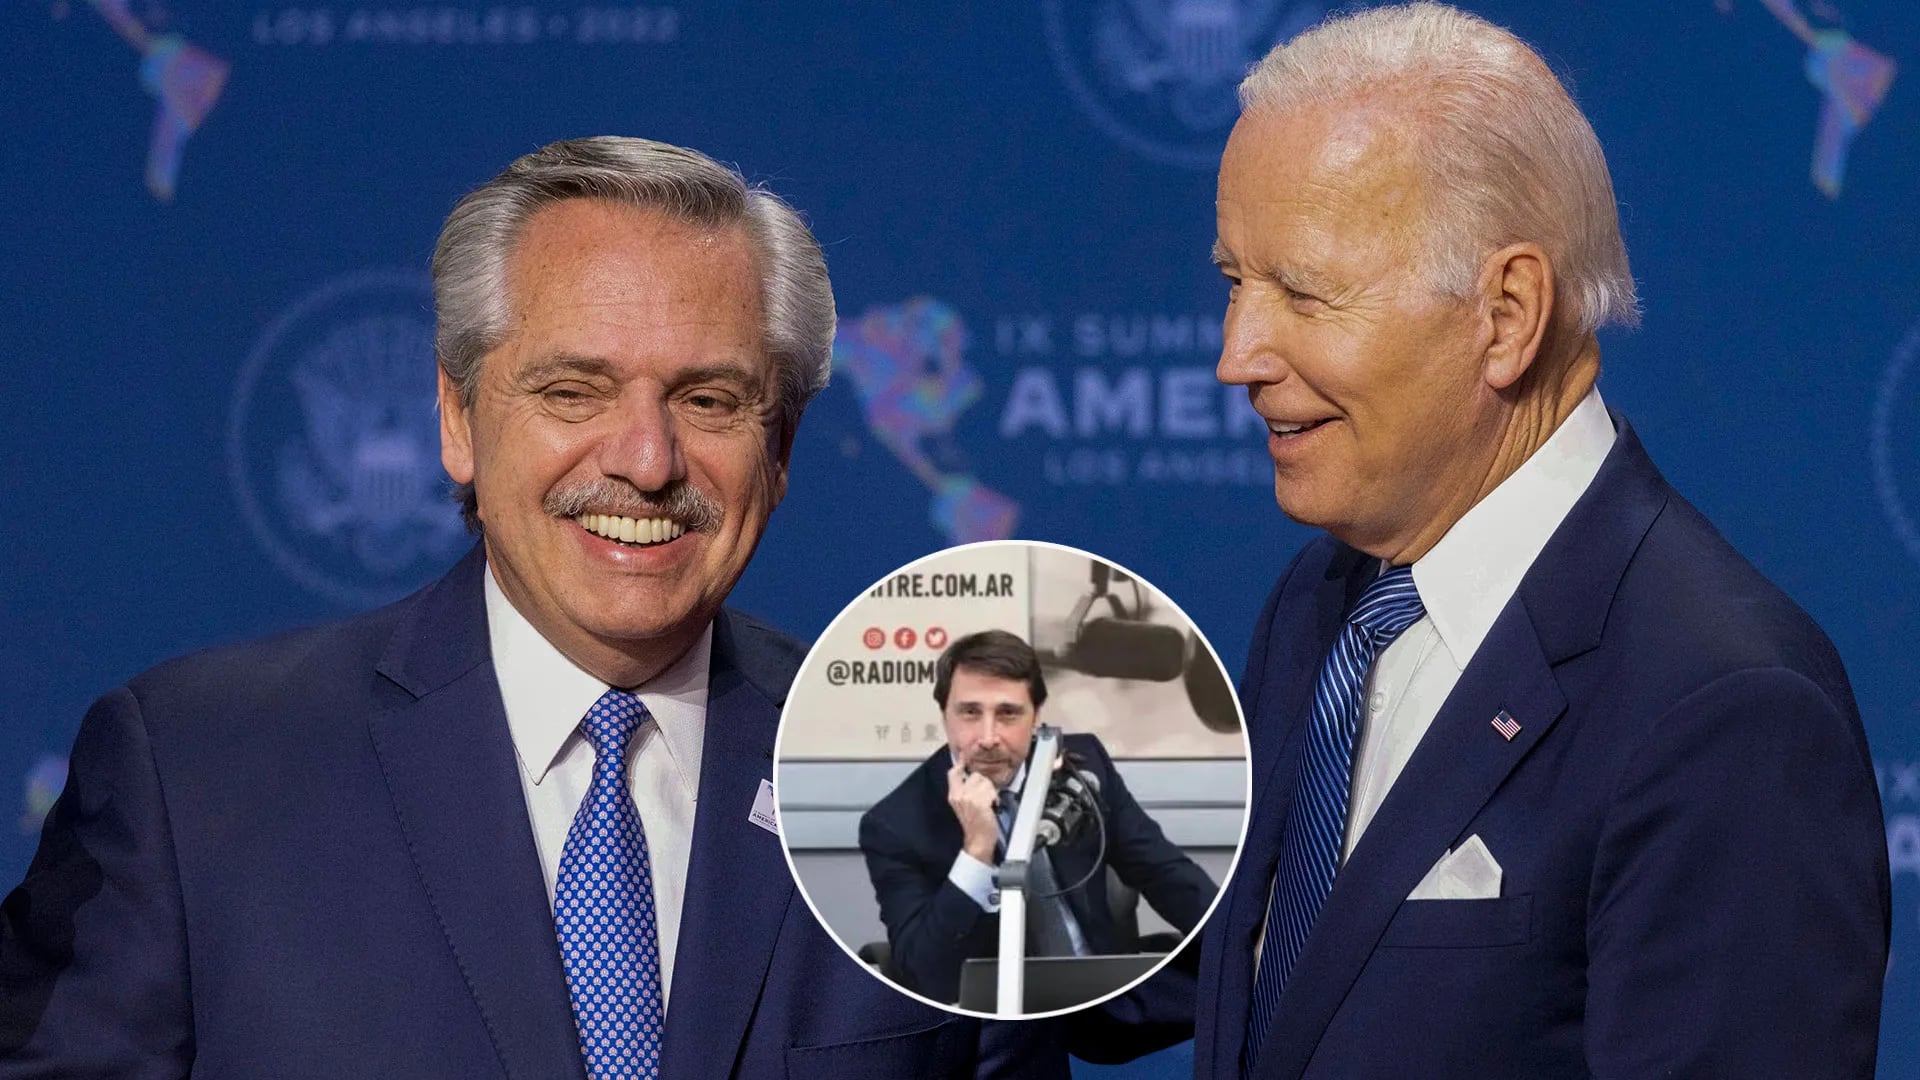 Eduardo Feinmann anticipó fuertes detalles de la reunión entre Alberto Fernández y Joe Biden: "Le va a pedir varias cosas"